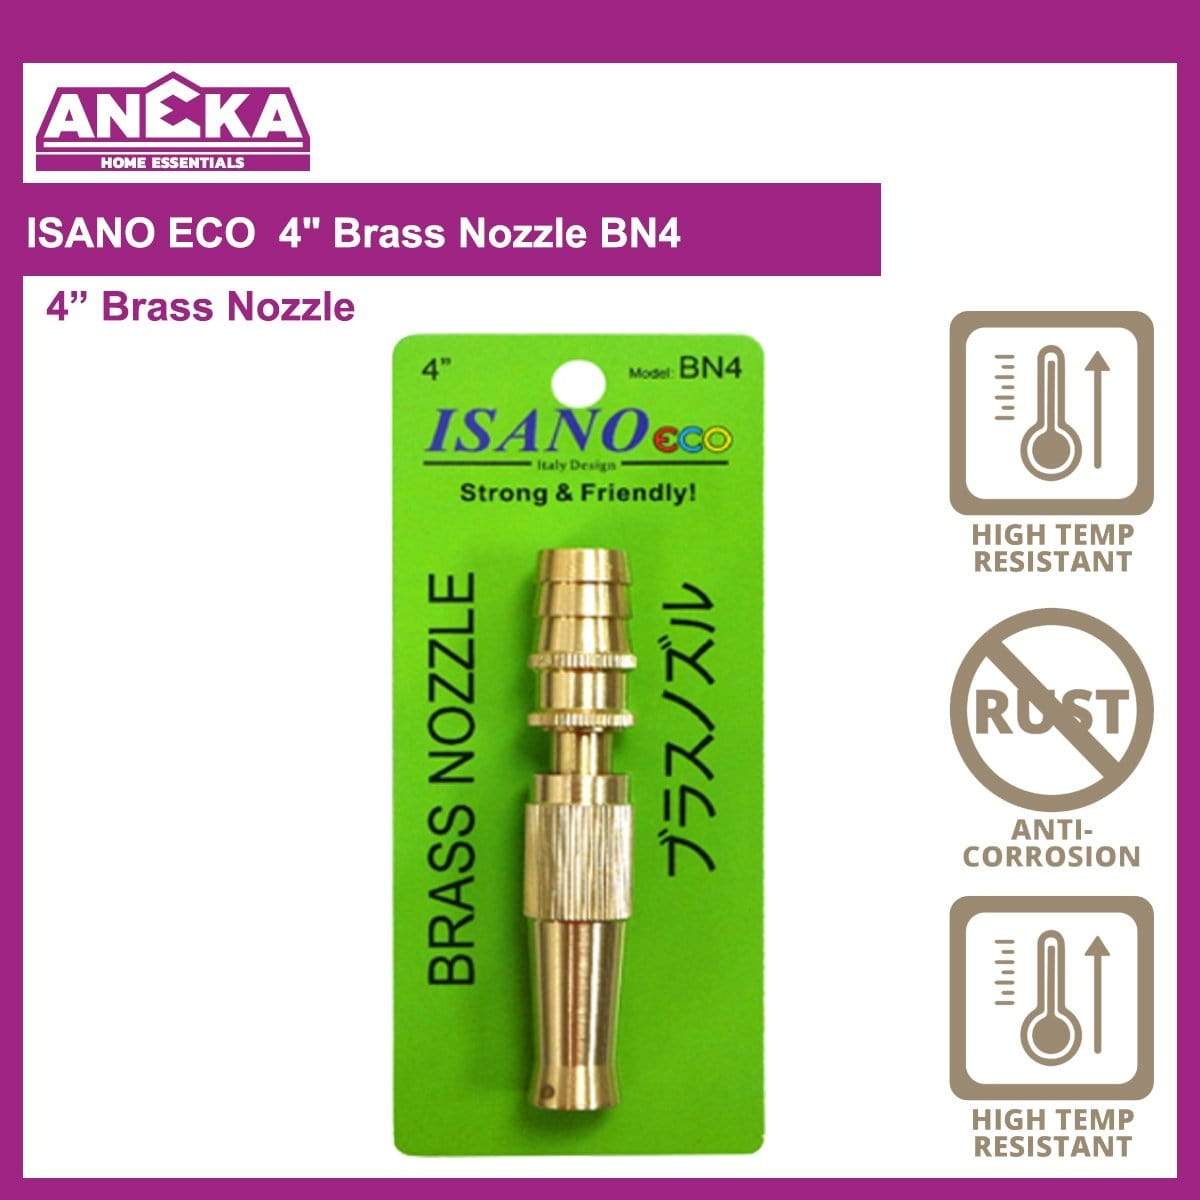 ISANO ECO 4" Brass Nozzle BN4